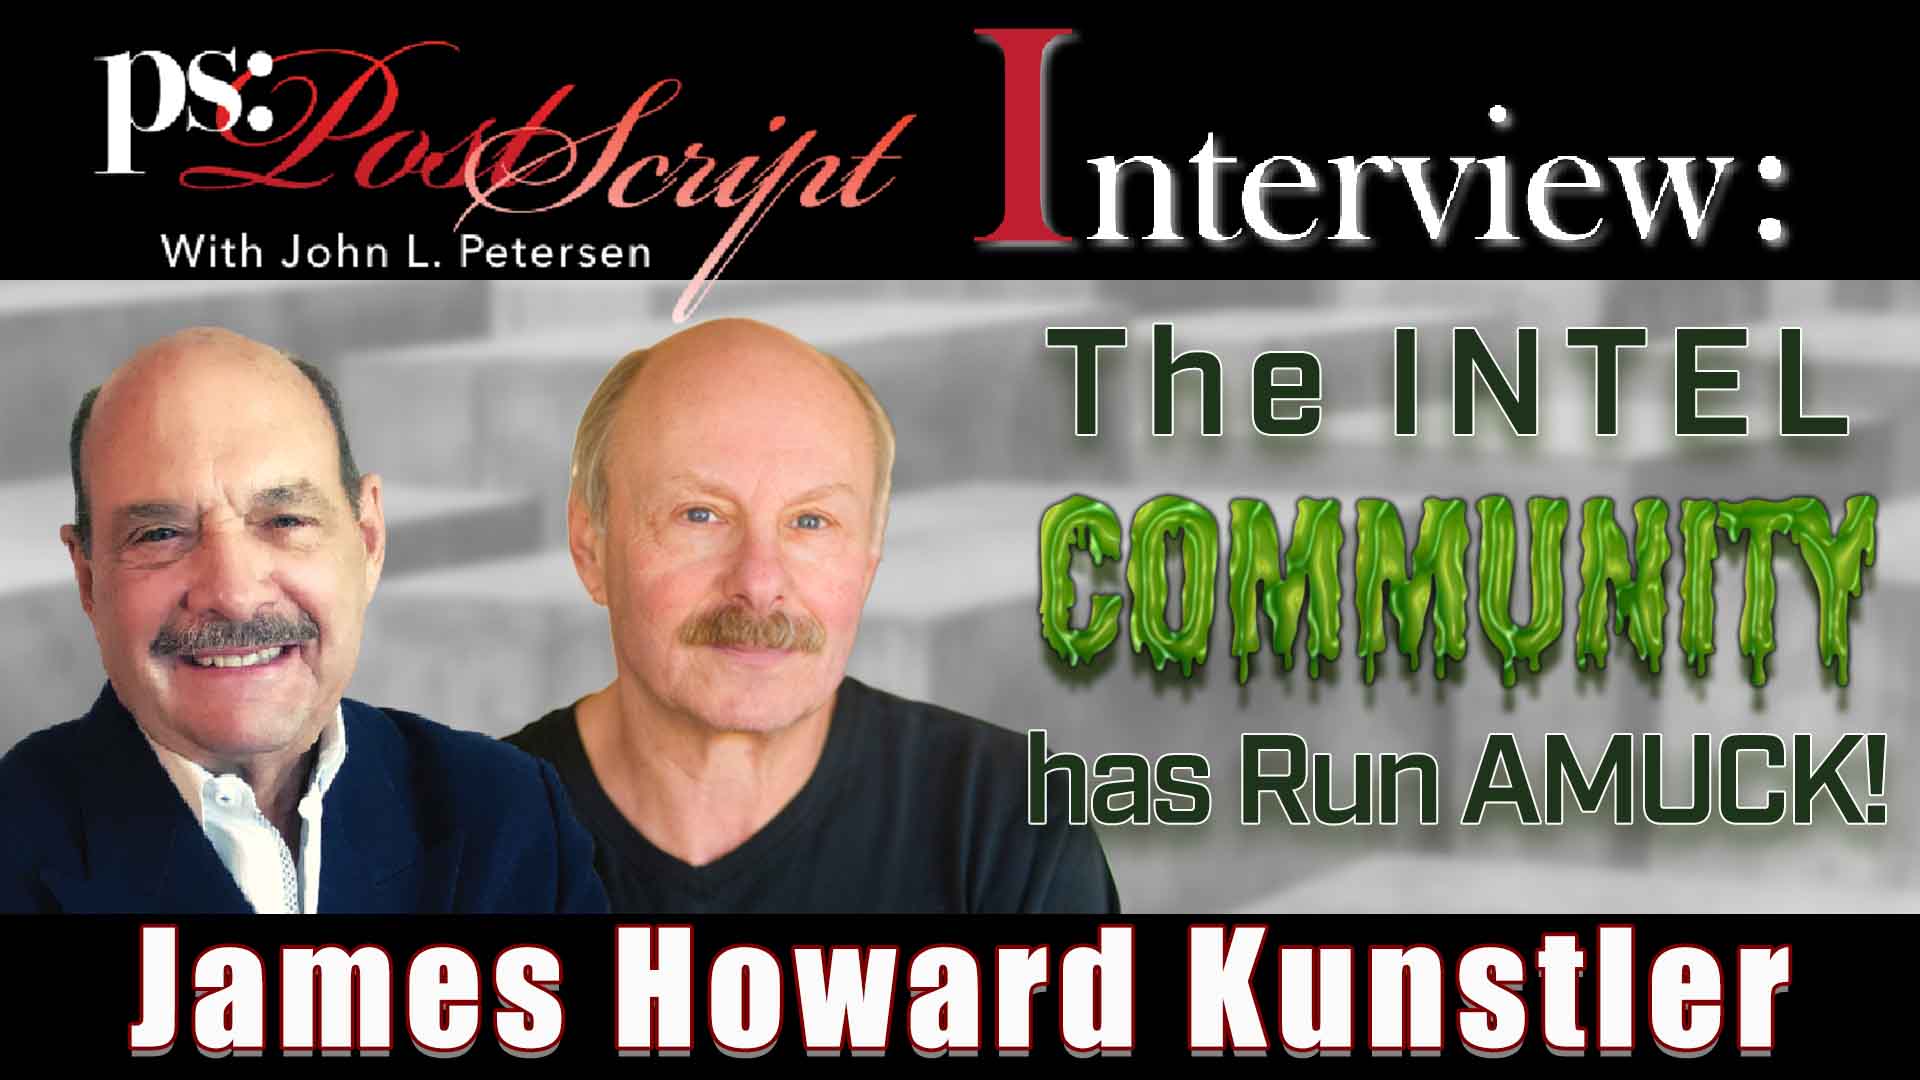 James Howard Kunstler Interview, The Intel Community Has Run Amuck